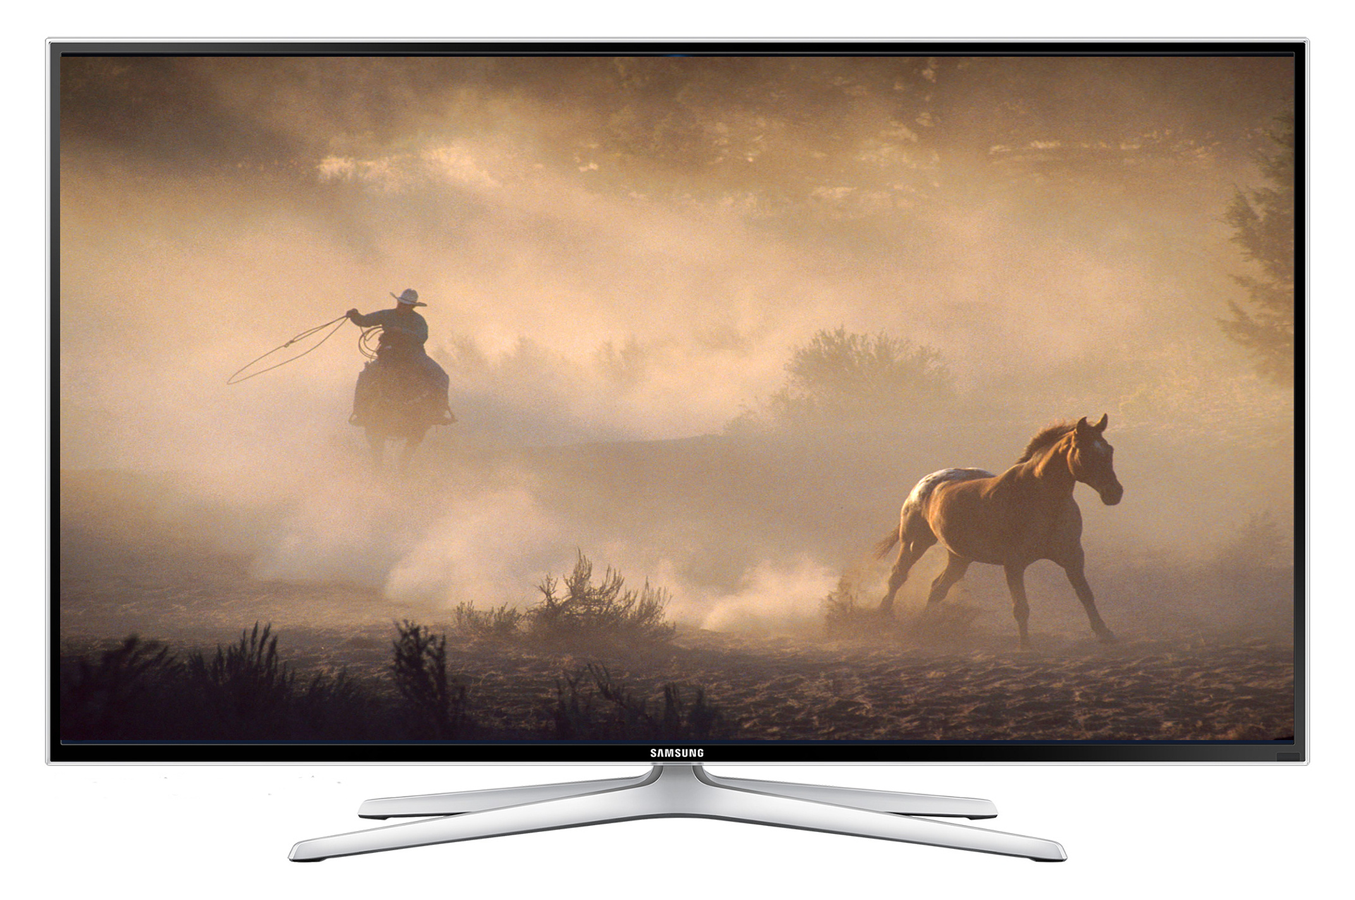 TV LED Samsung UE48H6400 SMART 3D 48h6400 (4012003) | Darty